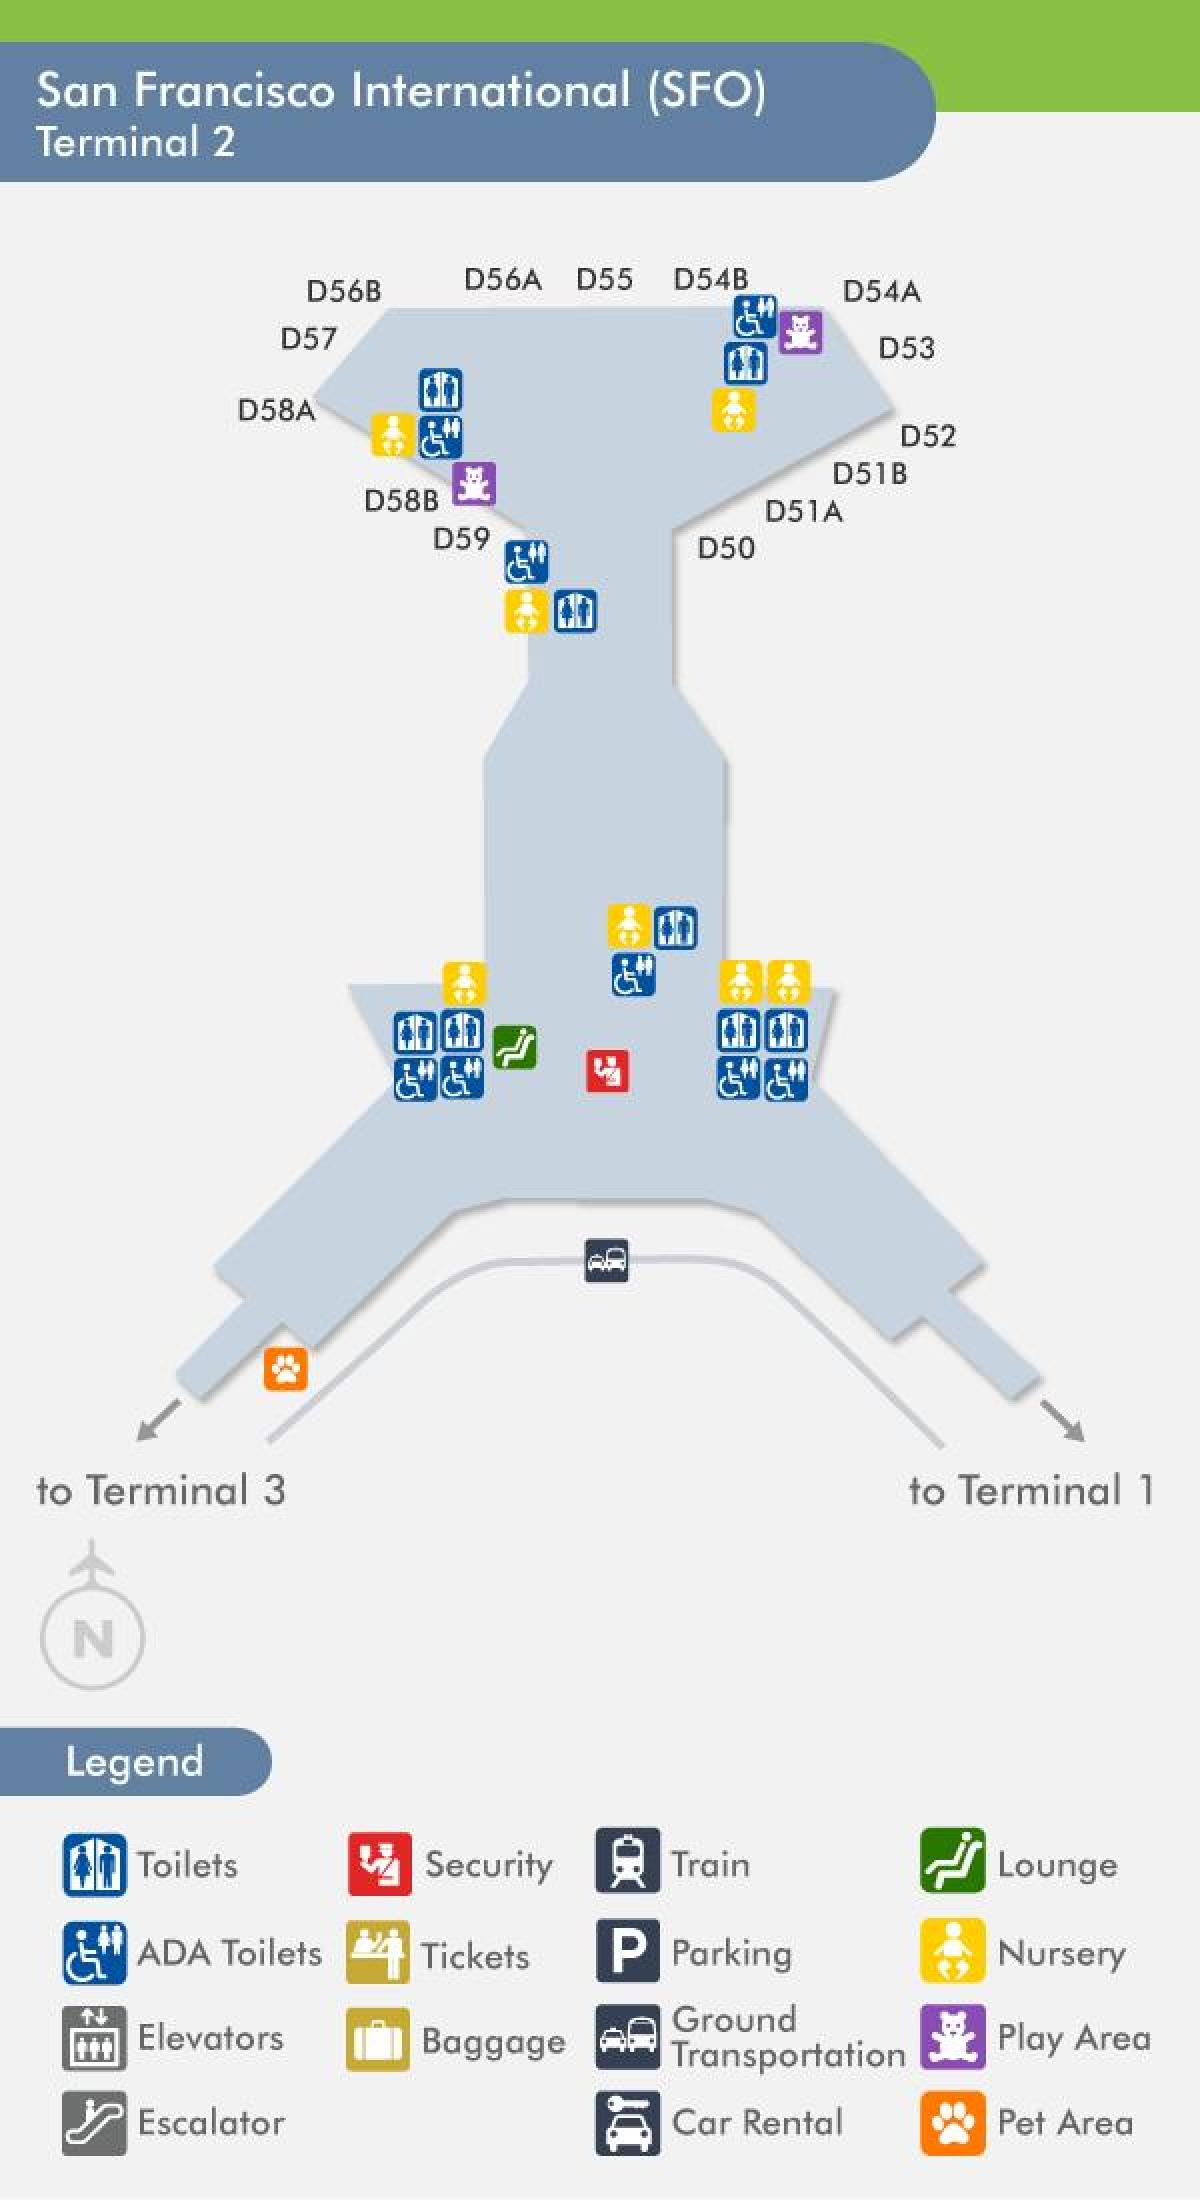 San Francisco airport terminal 2 på karta